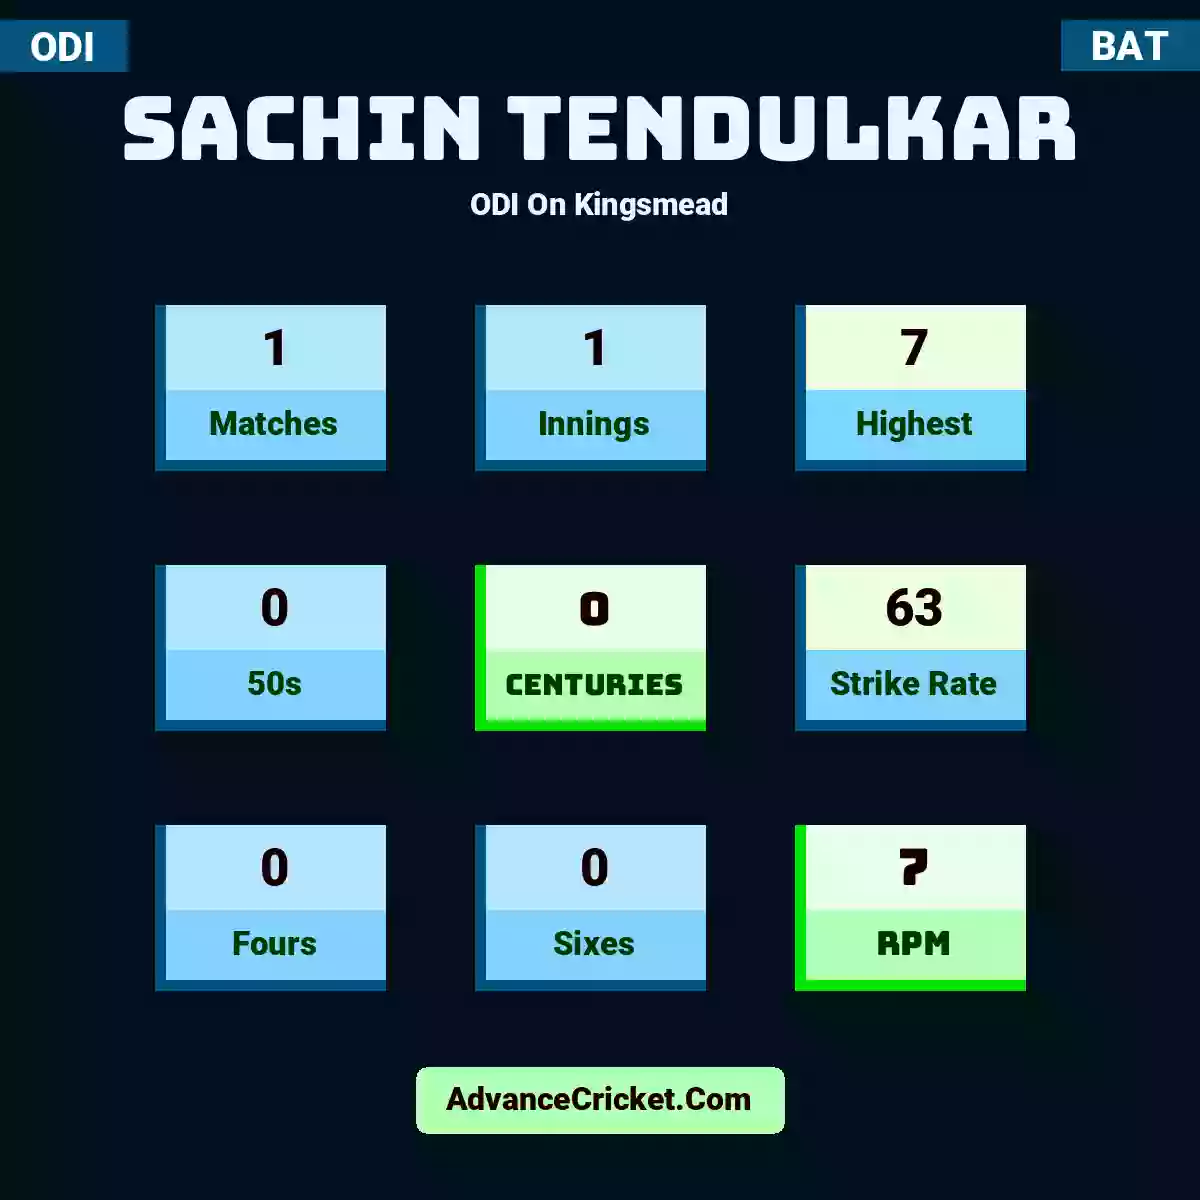 Sachin Tendulkar ODI  On Kingsmead, Sachin Tendulkar played 1 matches, scored 7 runs as highest, 0 half-centuries, and 0 centuries, with a strike rate of 63. S.Tendulkar hit 0 fours and 0 sixes, with an RPM of 7.